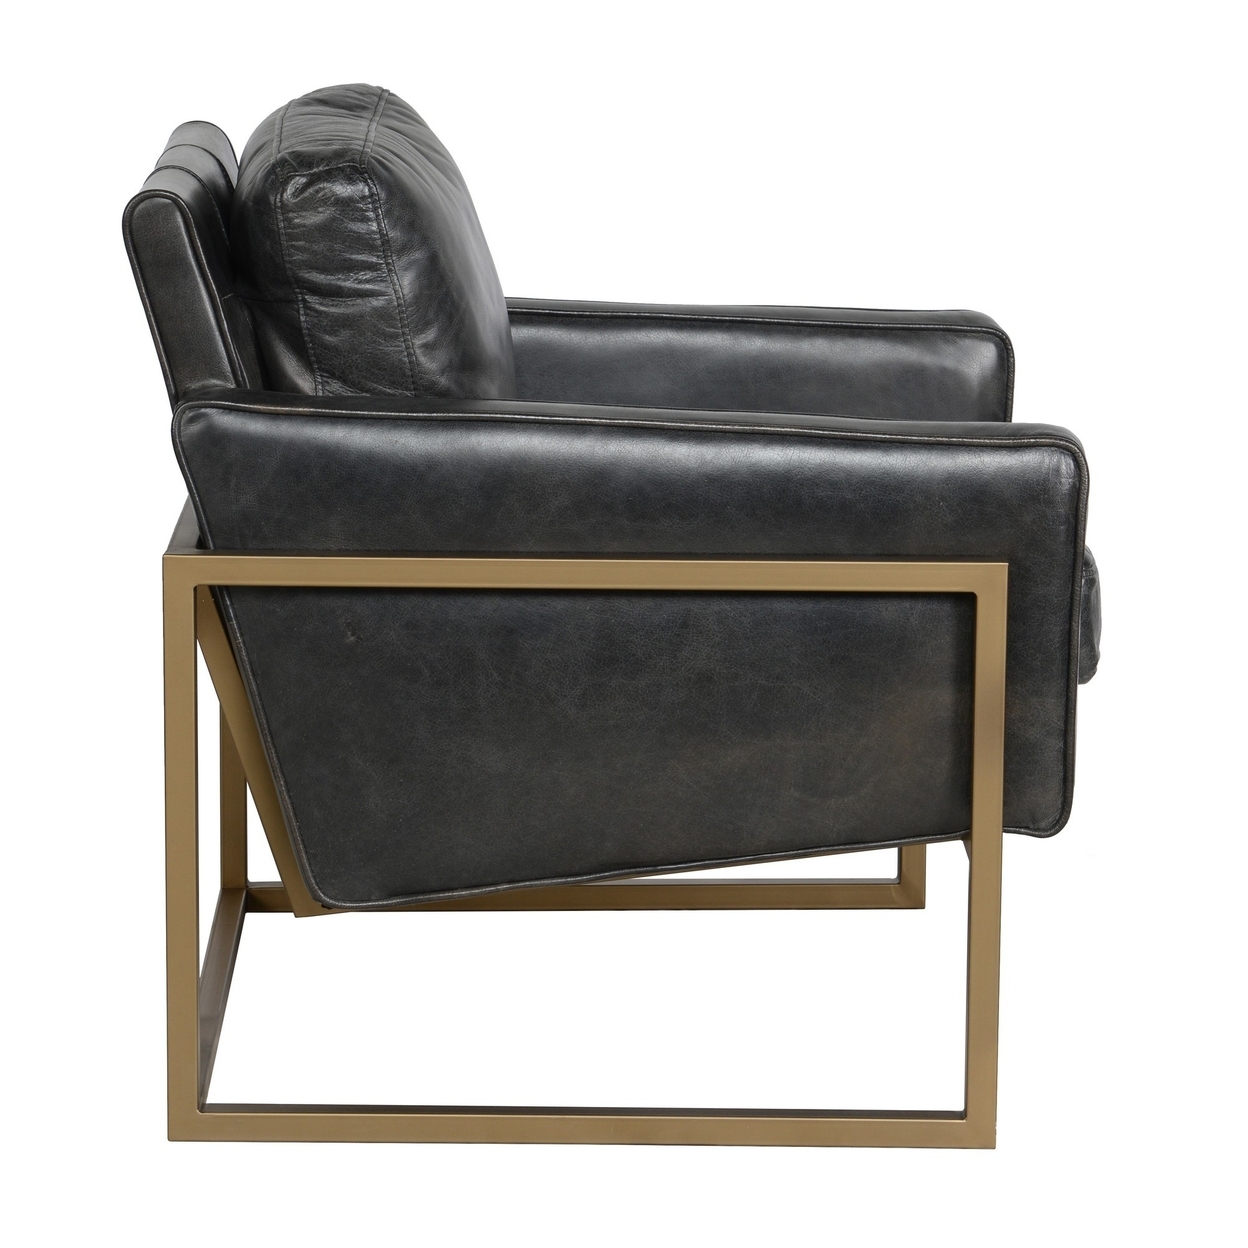 30 Inch Classic Club Chair, Top Grain Black Leather Upholstery, Brass Frame- Saltoro Sherpi